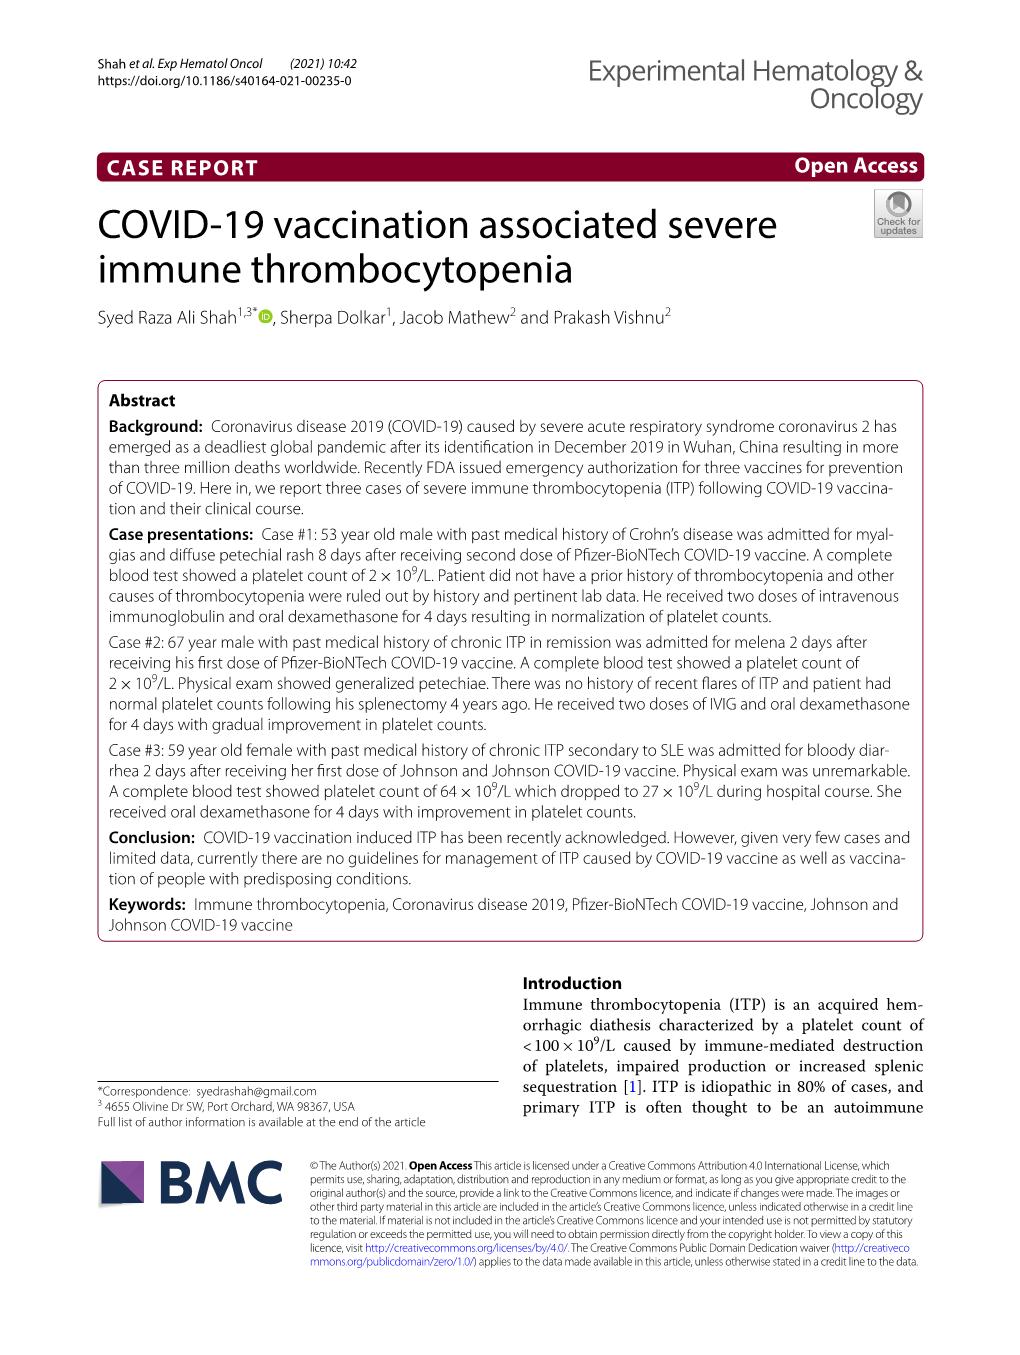 COVID-19 Vaccination Associated Severe Immune Thrombocytopenia